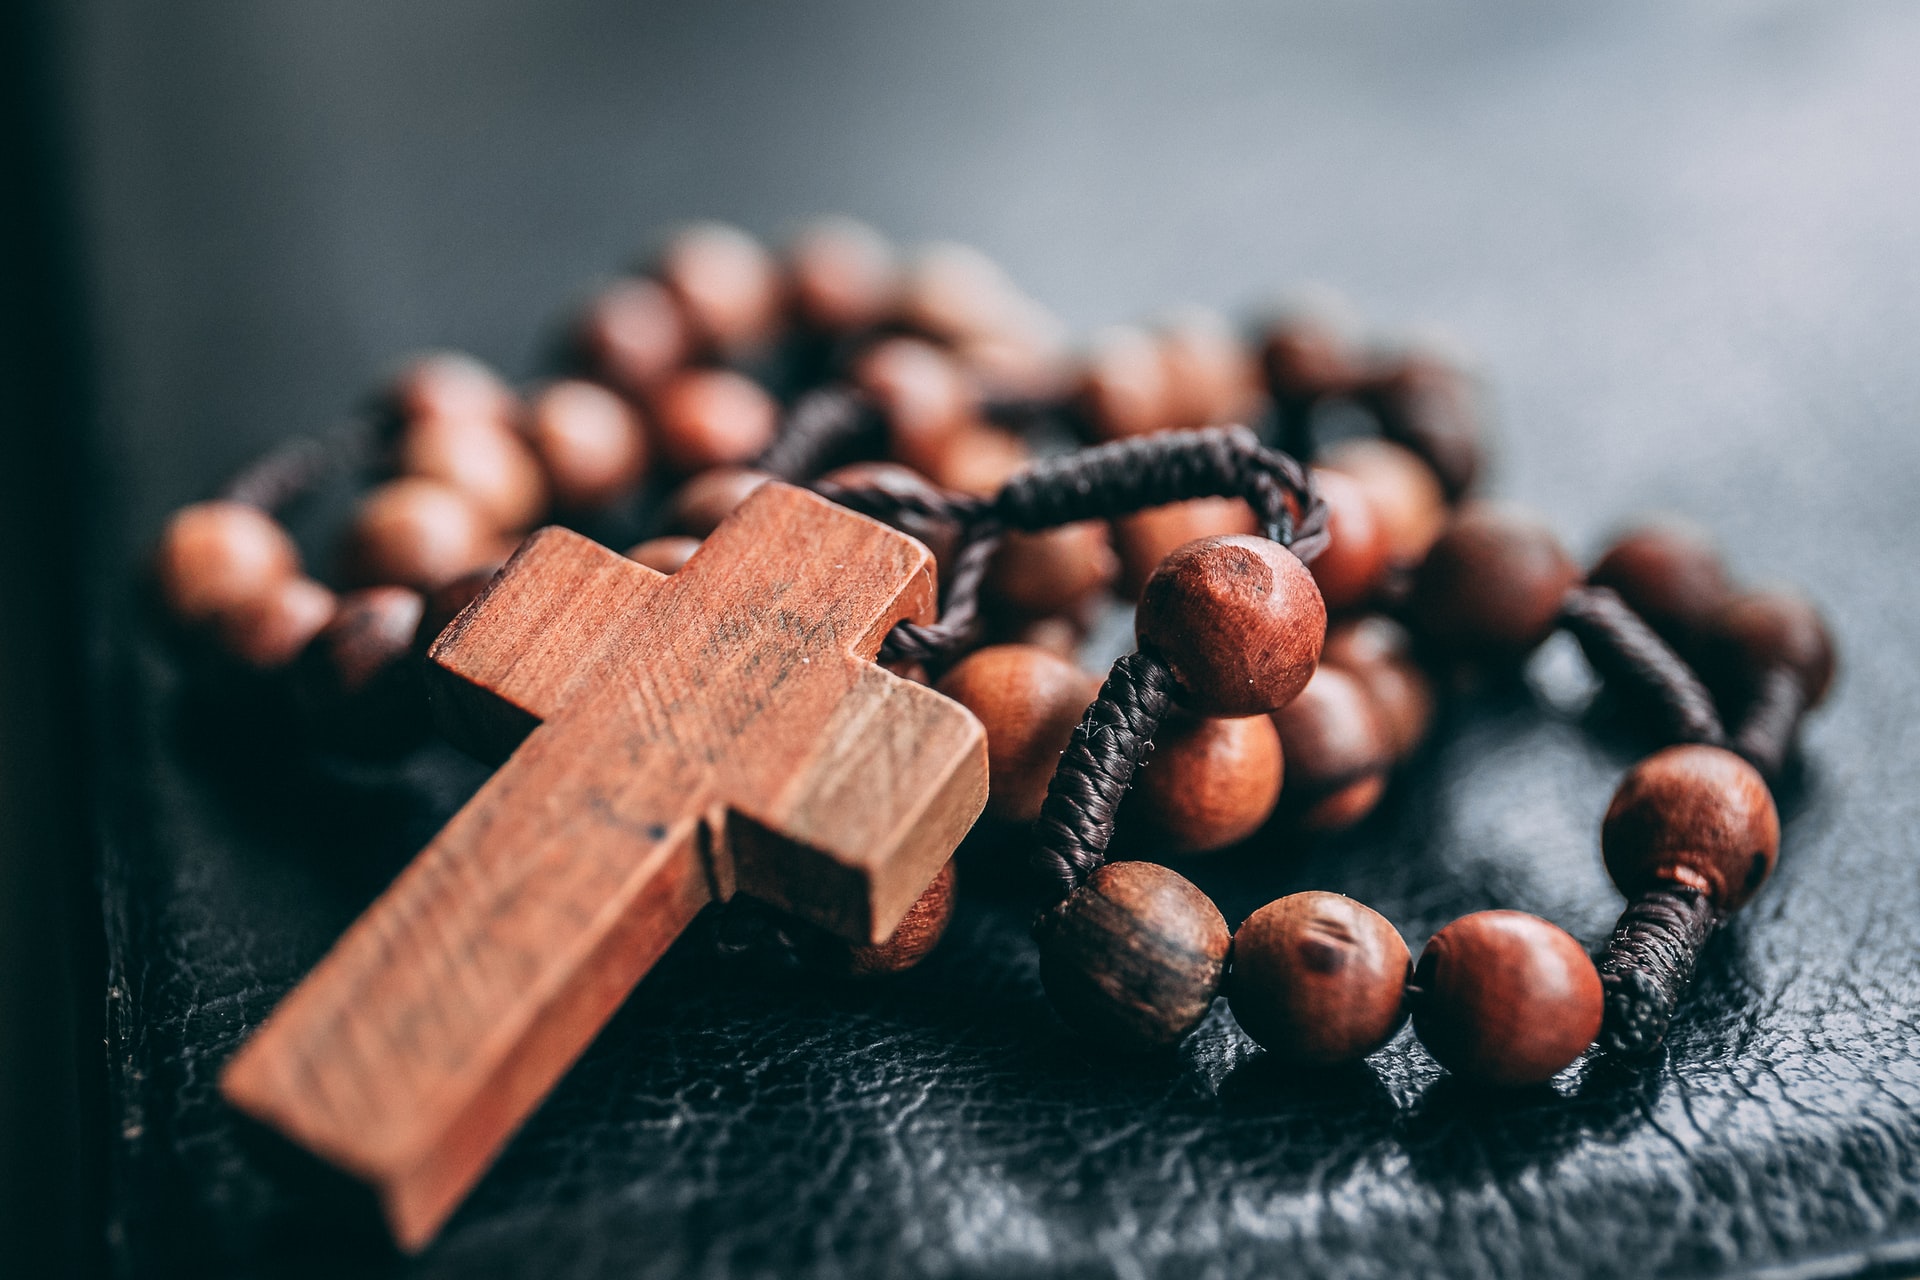 Rosary representing religion